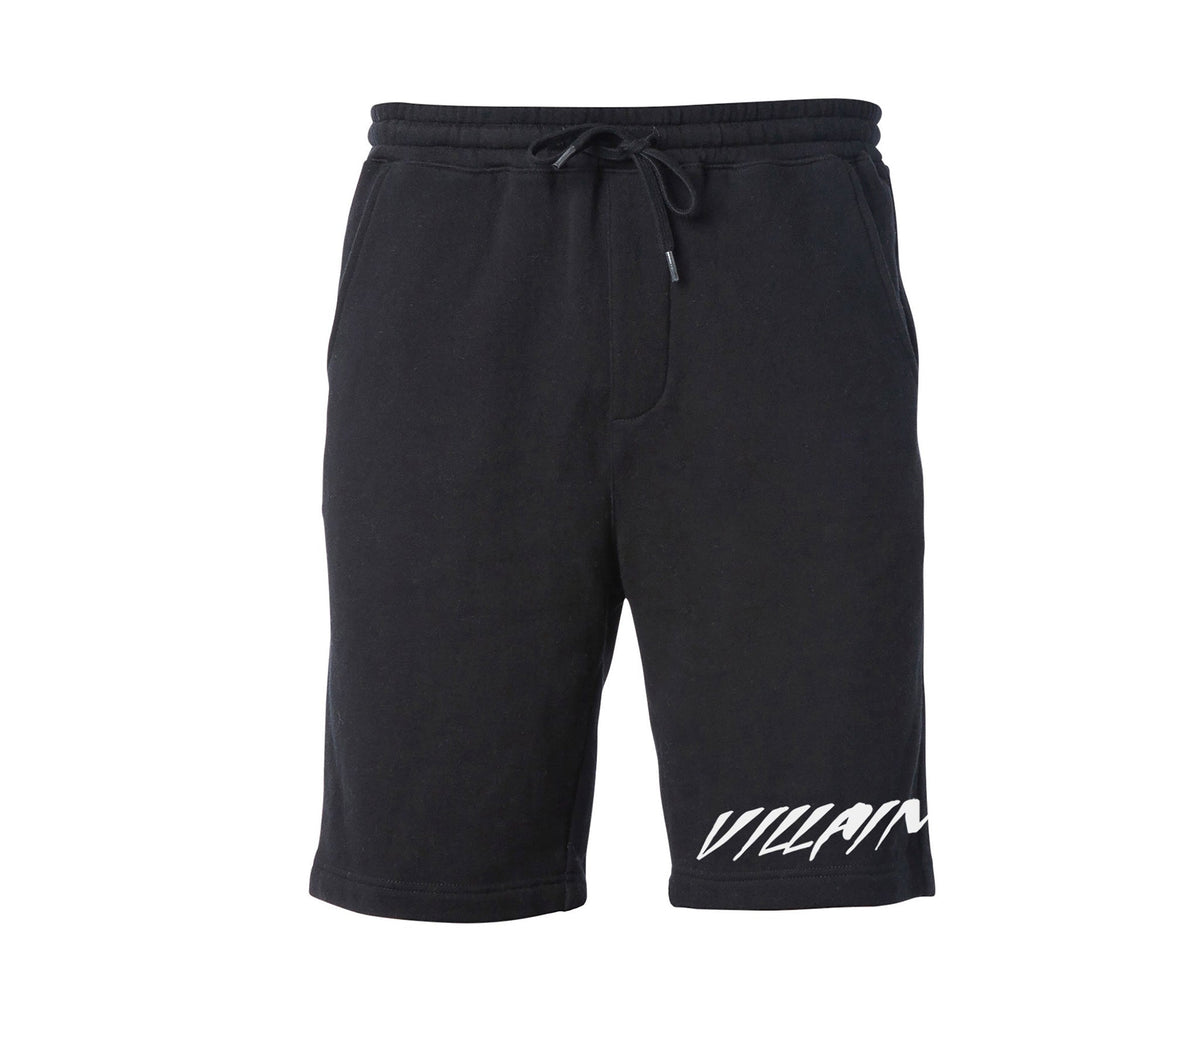 Villain Tapered Fleece Shorts XS / Black TuffWraps.com